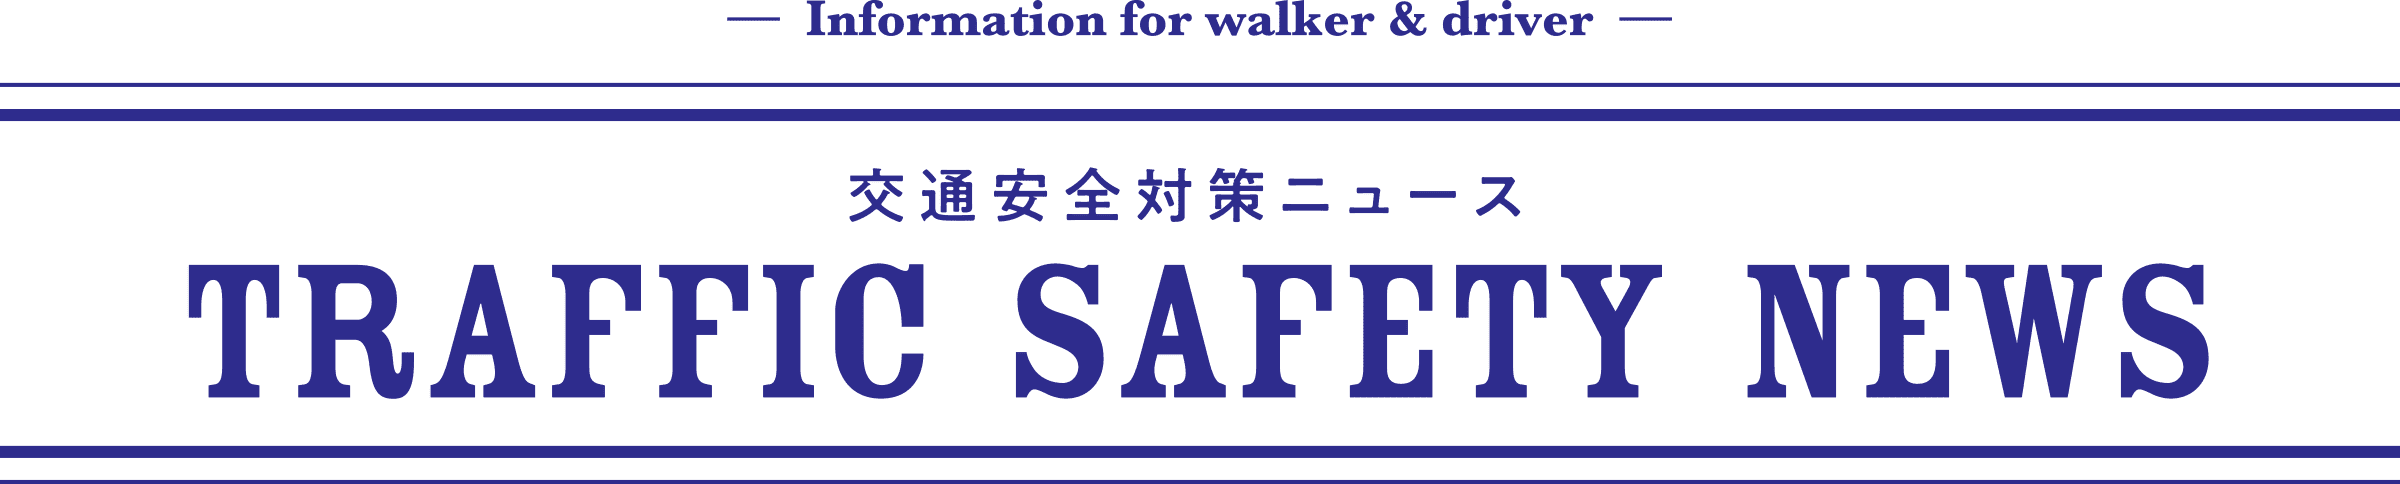 — Information for walker & driver — 交通安全対策ニュース TRAFFIC SAFETY NEWS